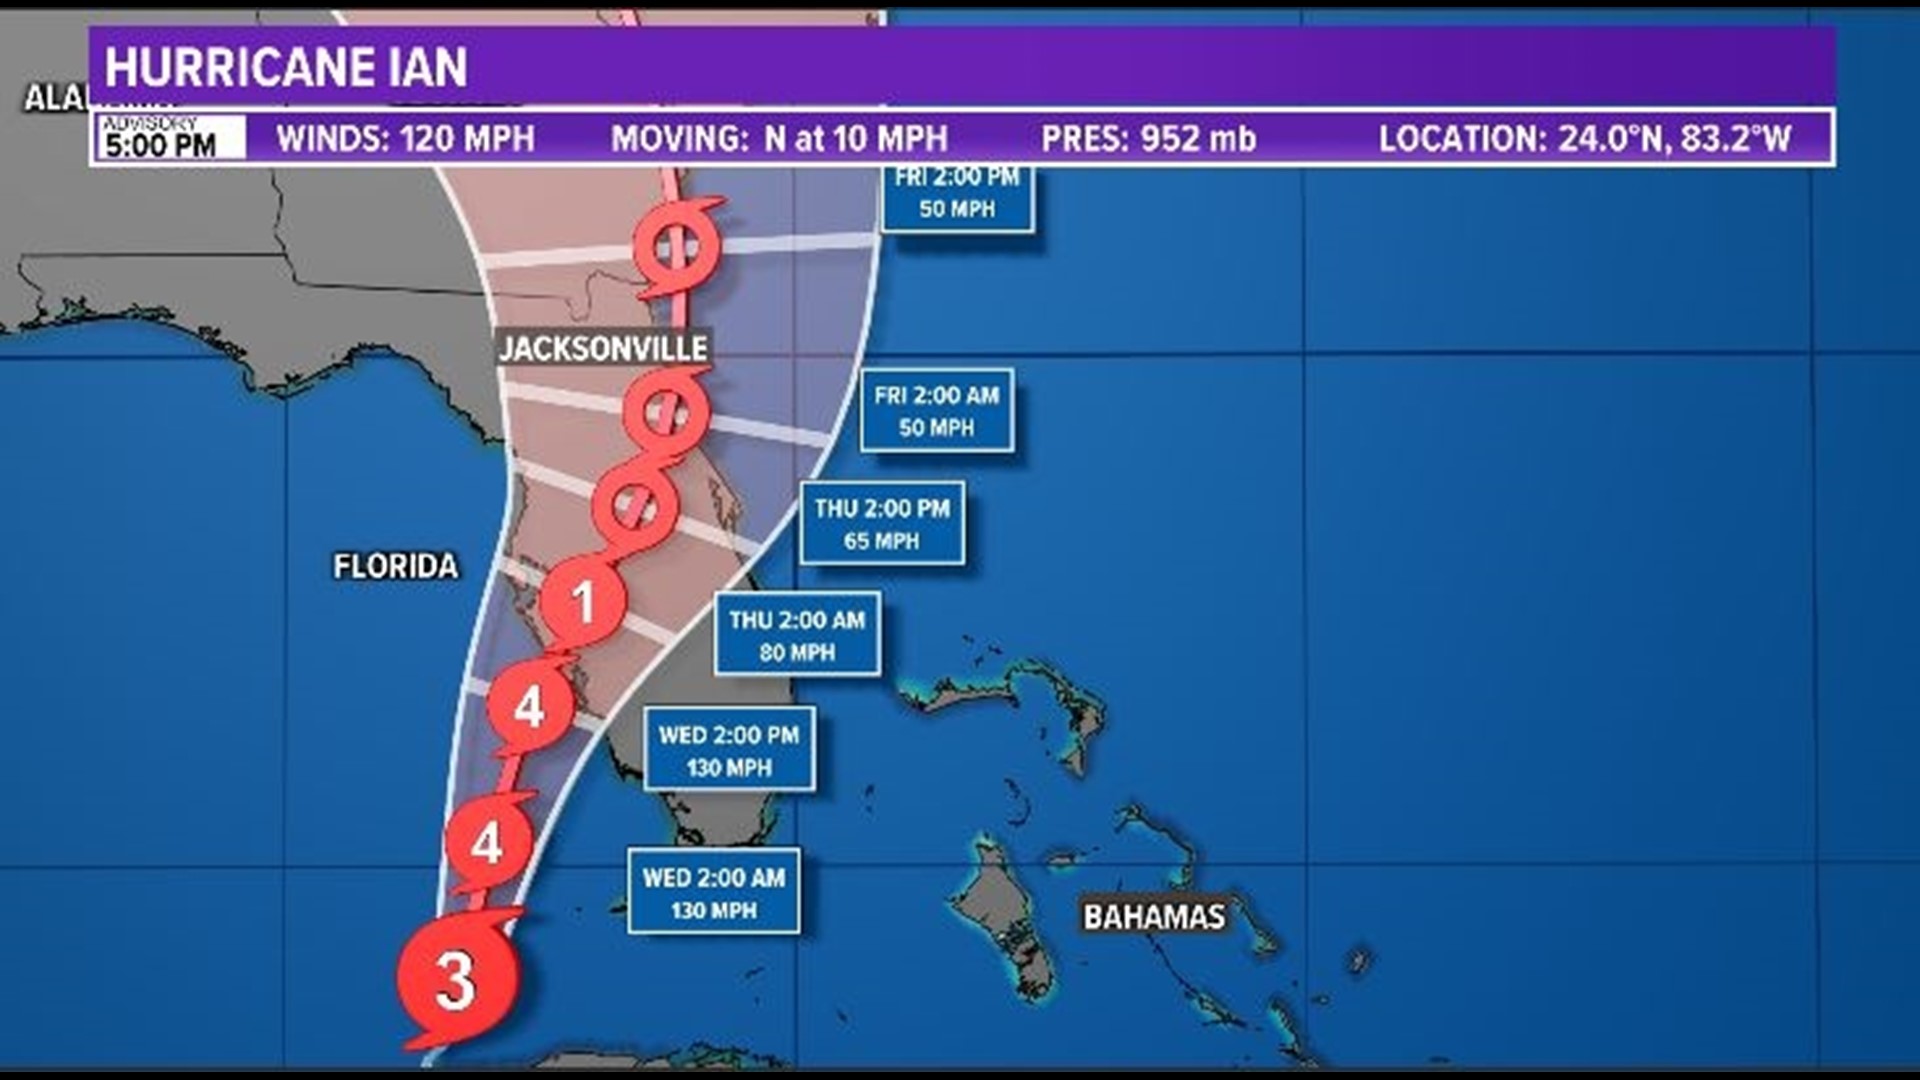 First Coast News Tim Deegan, Makayla Lucero gives update ahead of Hurricane Ian's arrival in Florida. Tuesday, 5 p.m. Update.